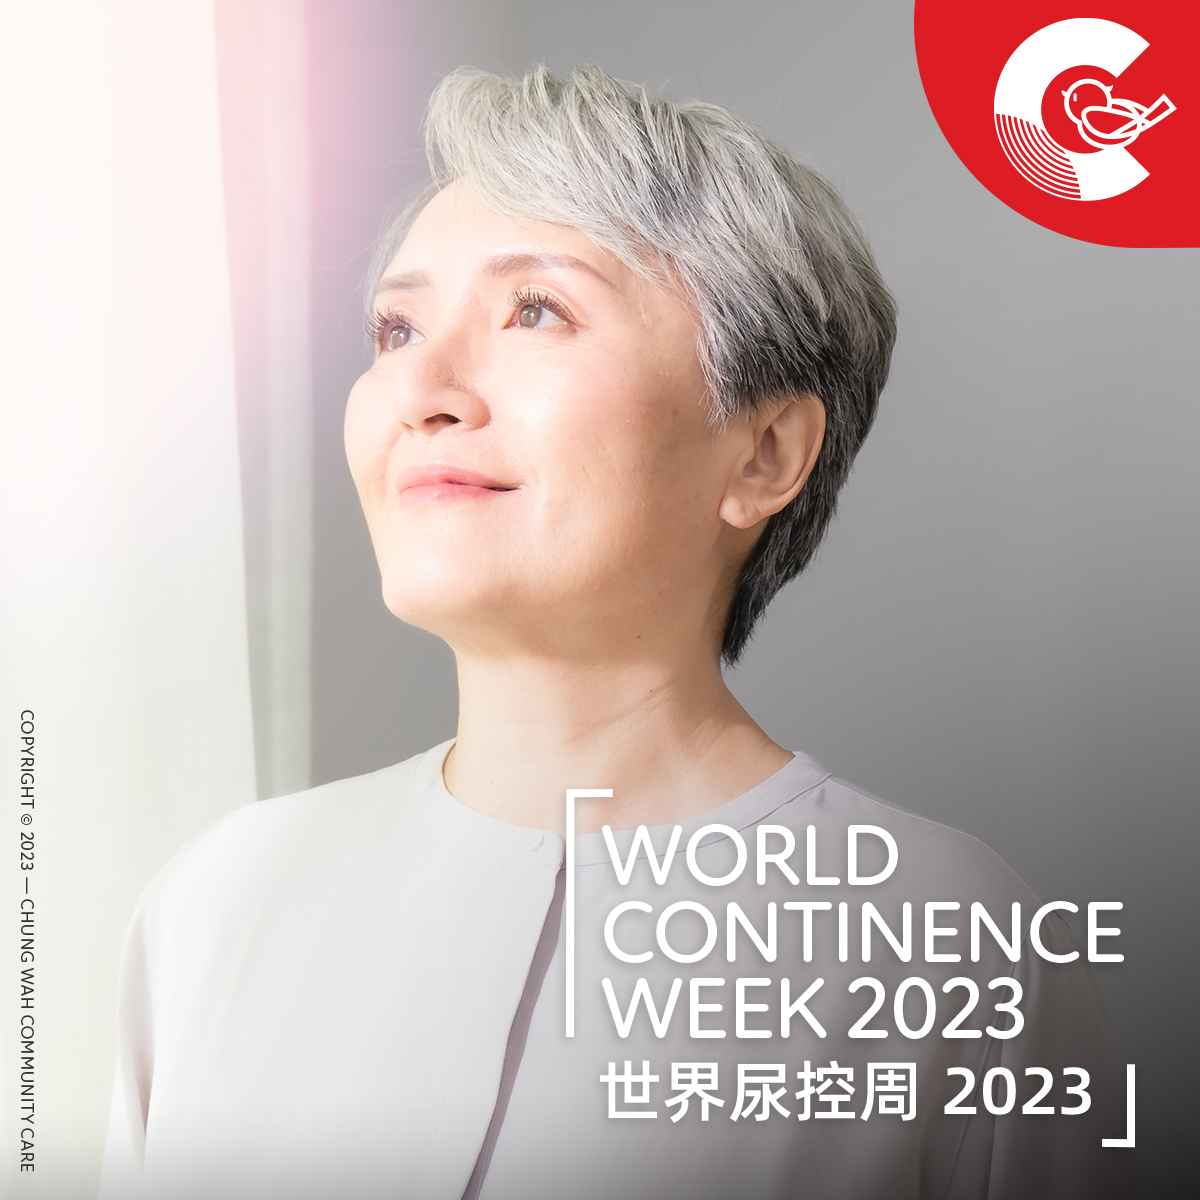 World Continence Week 2023